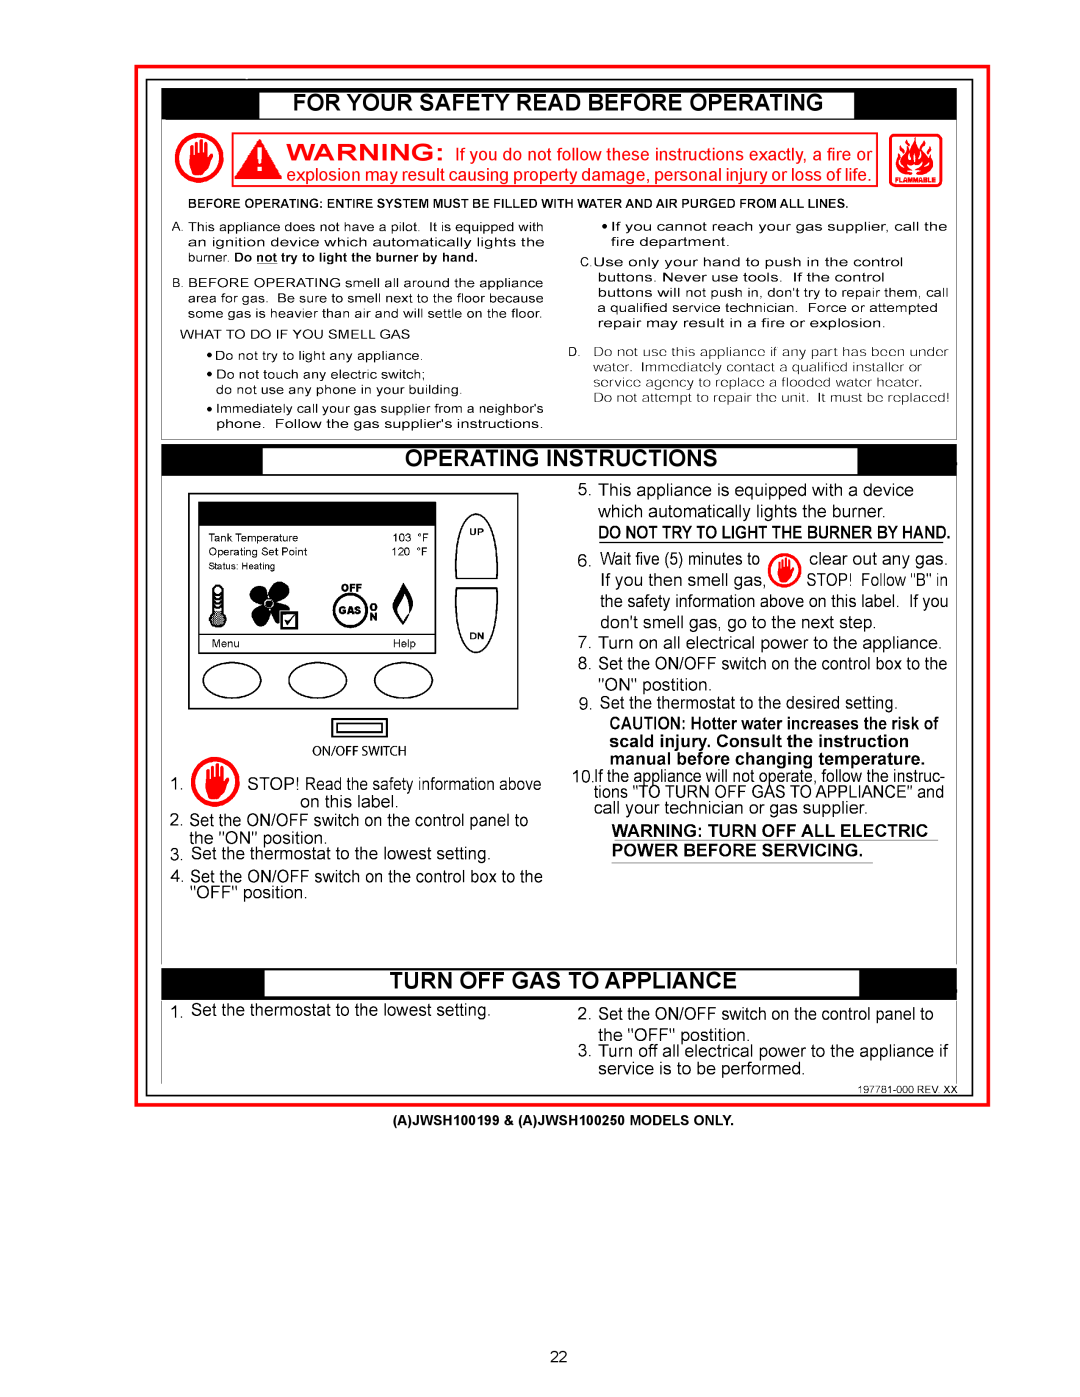 Ferguson JWSH100250, JWSH100150 Operatinginstructions Turnoffoffgastotoappliance, For Your Safety Read Before Operating 